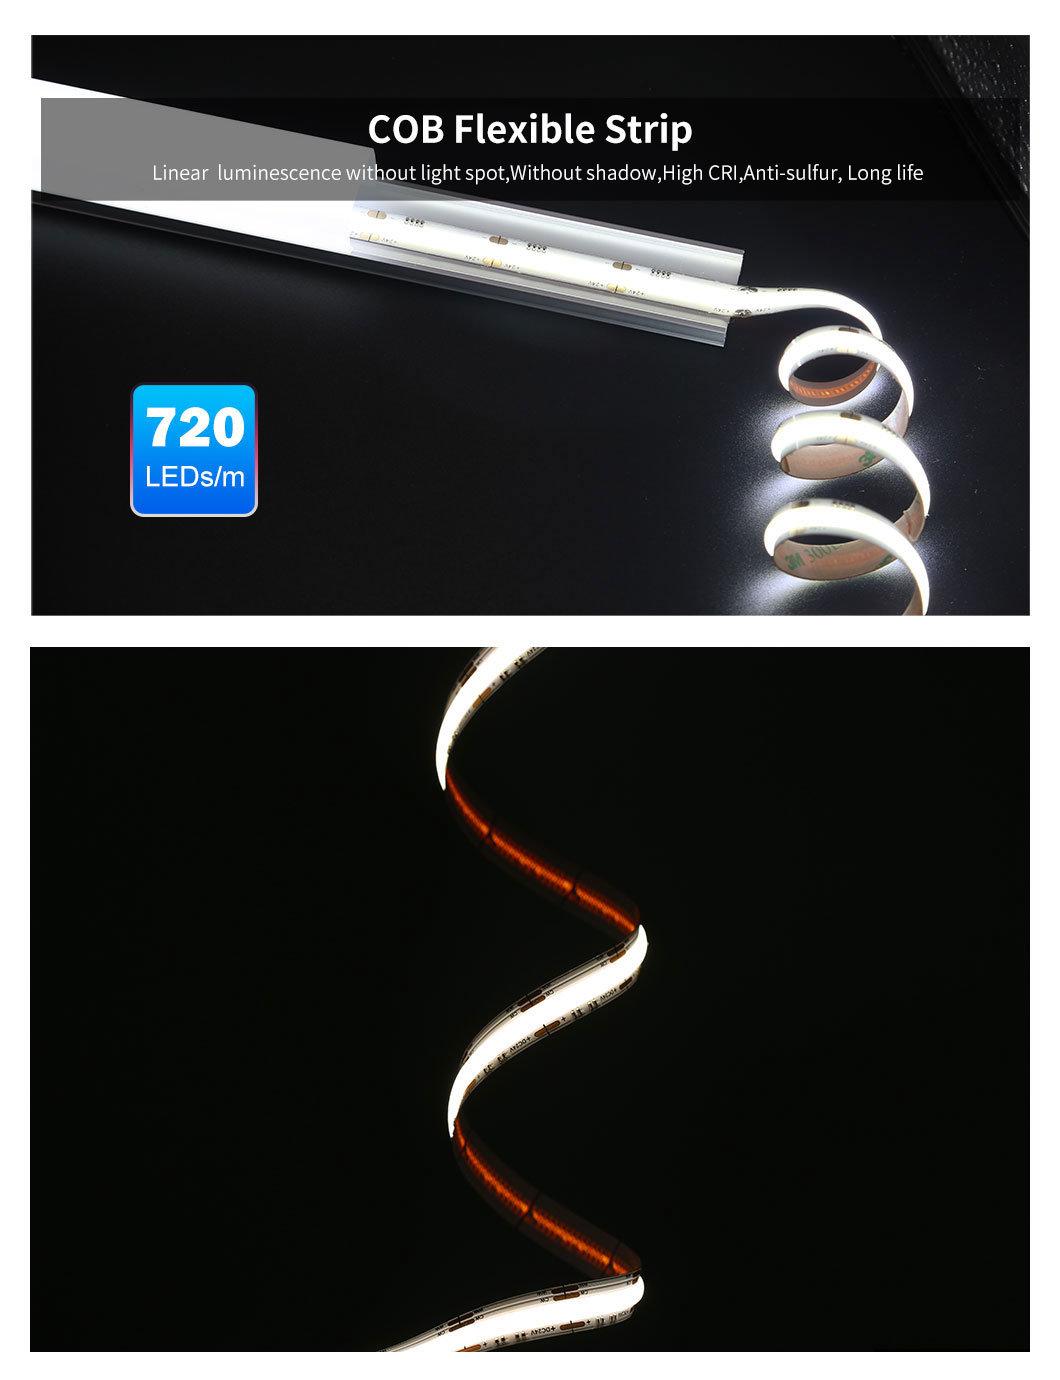 24V Rope Light LED Strip COB 720chips RGBW LED Lamps